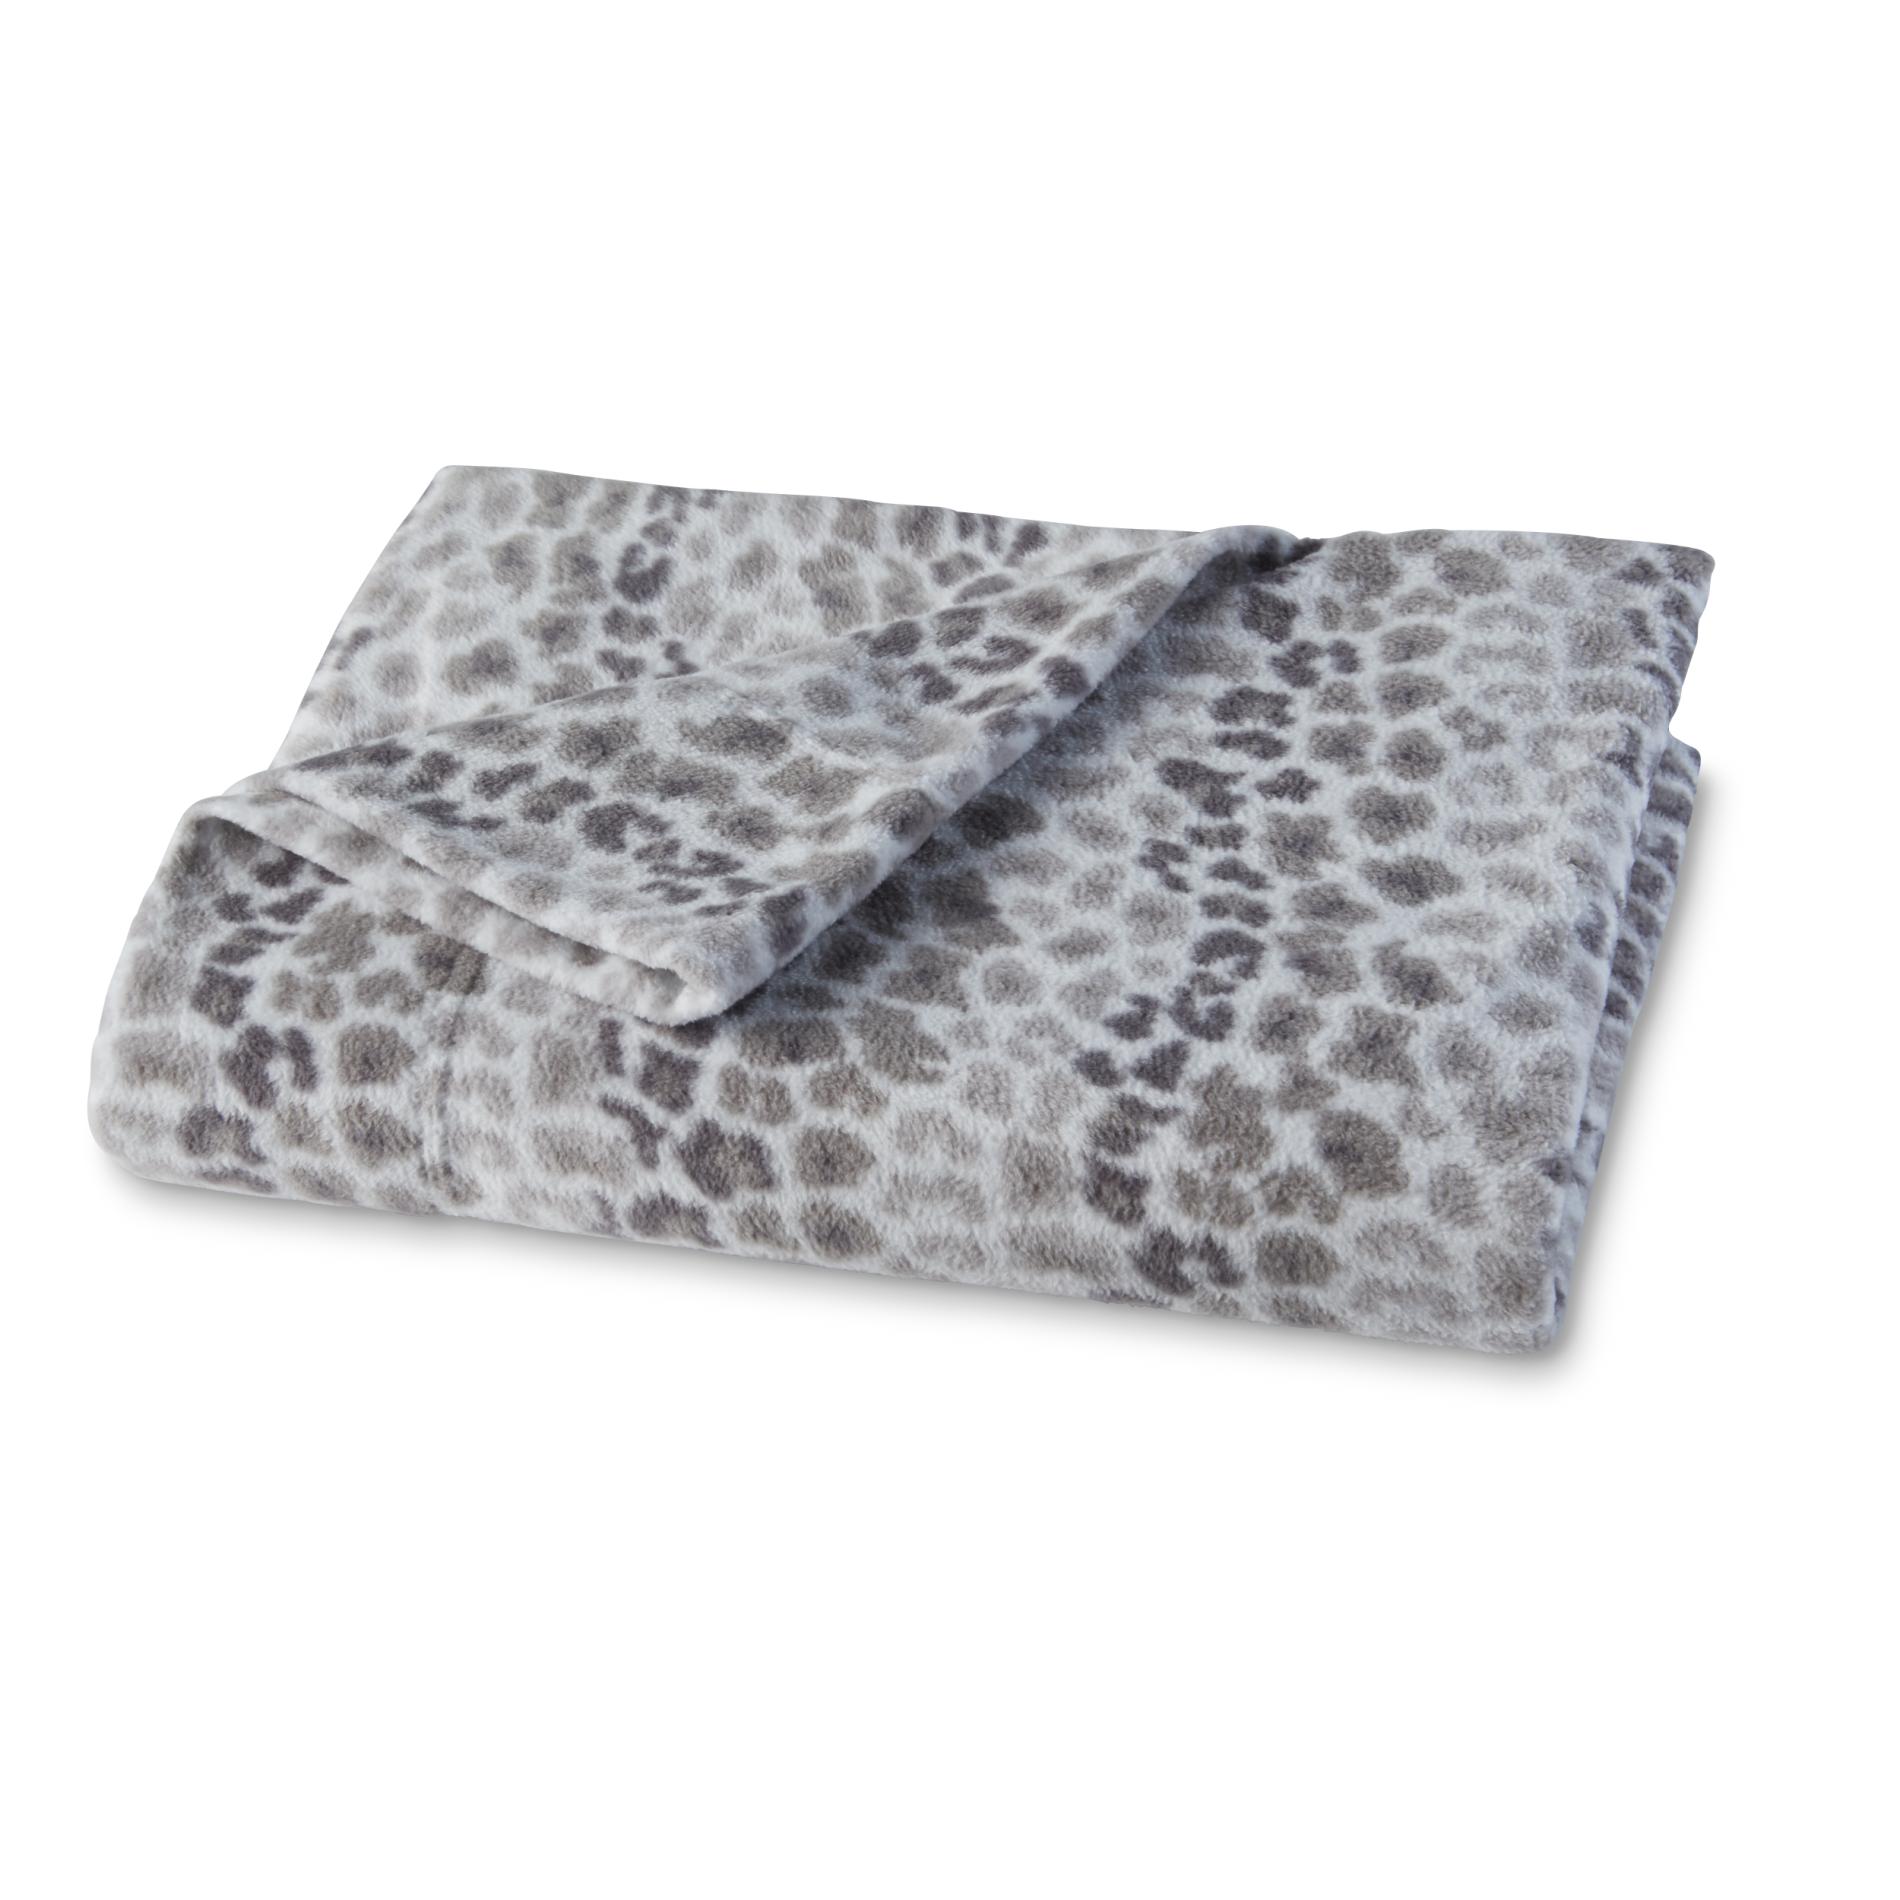 Cannon Fleece Bedsheet Set - Leopard Print